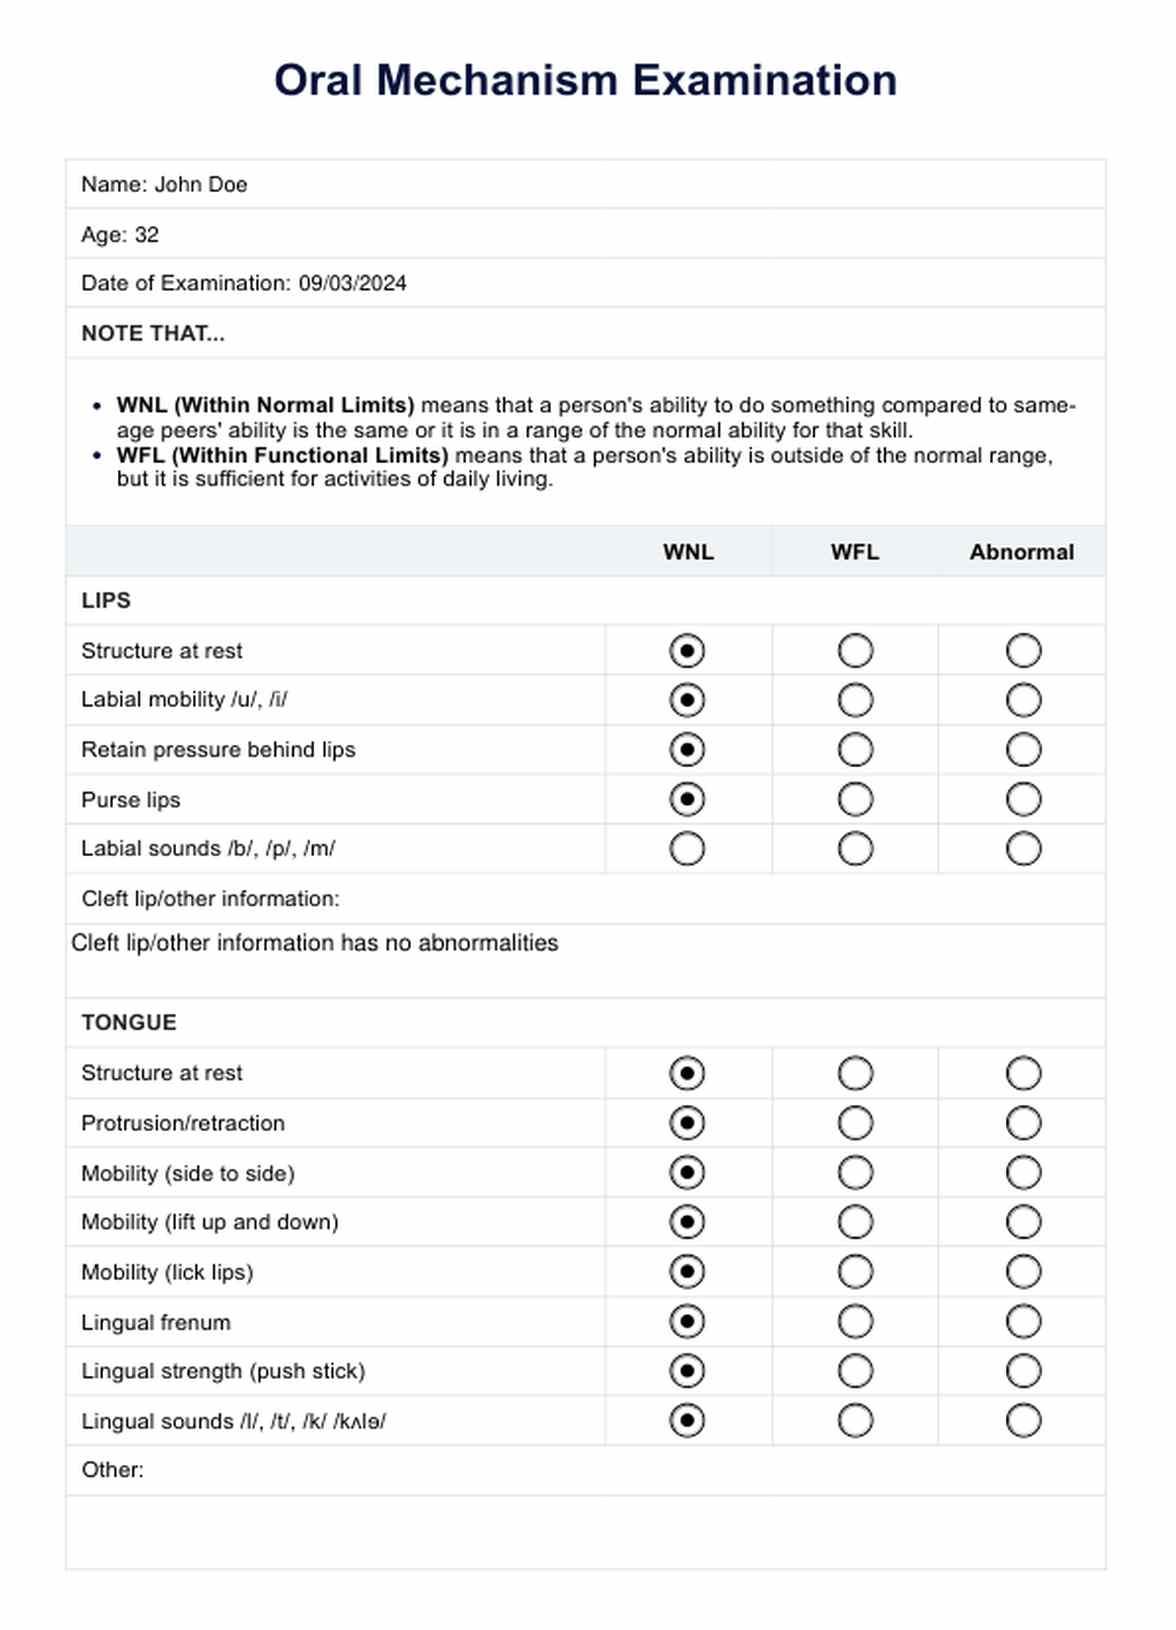 Oral Mechanism Examination PDF Example